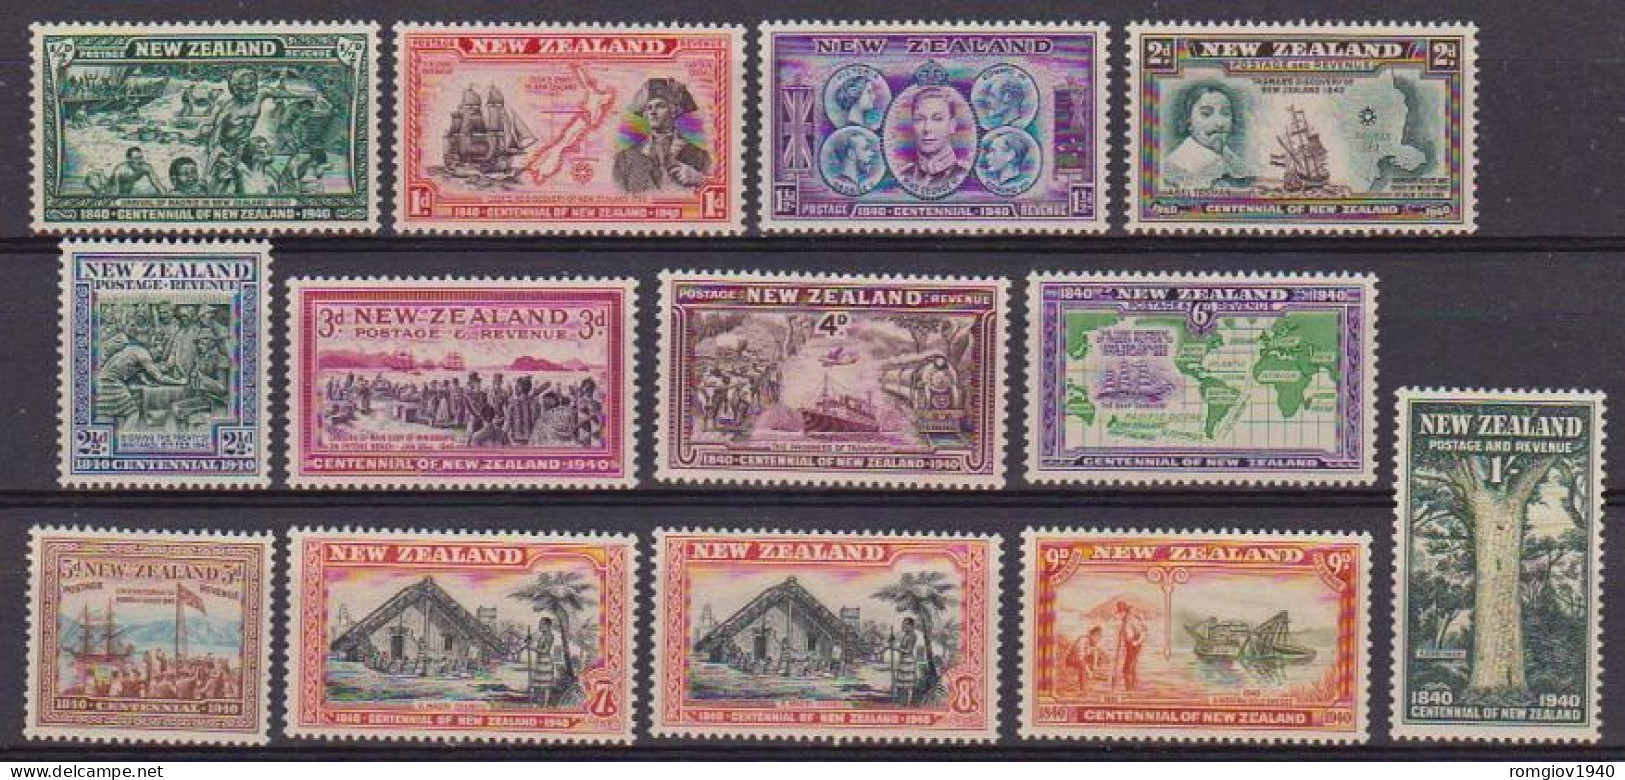 NUOVA ZELANDA  1940 CENTENARIO DELLA SOVRANITA' BRITANNICA  UNIF. 293-305  MLH VF+++++++++++++++++ - Unused Stamps